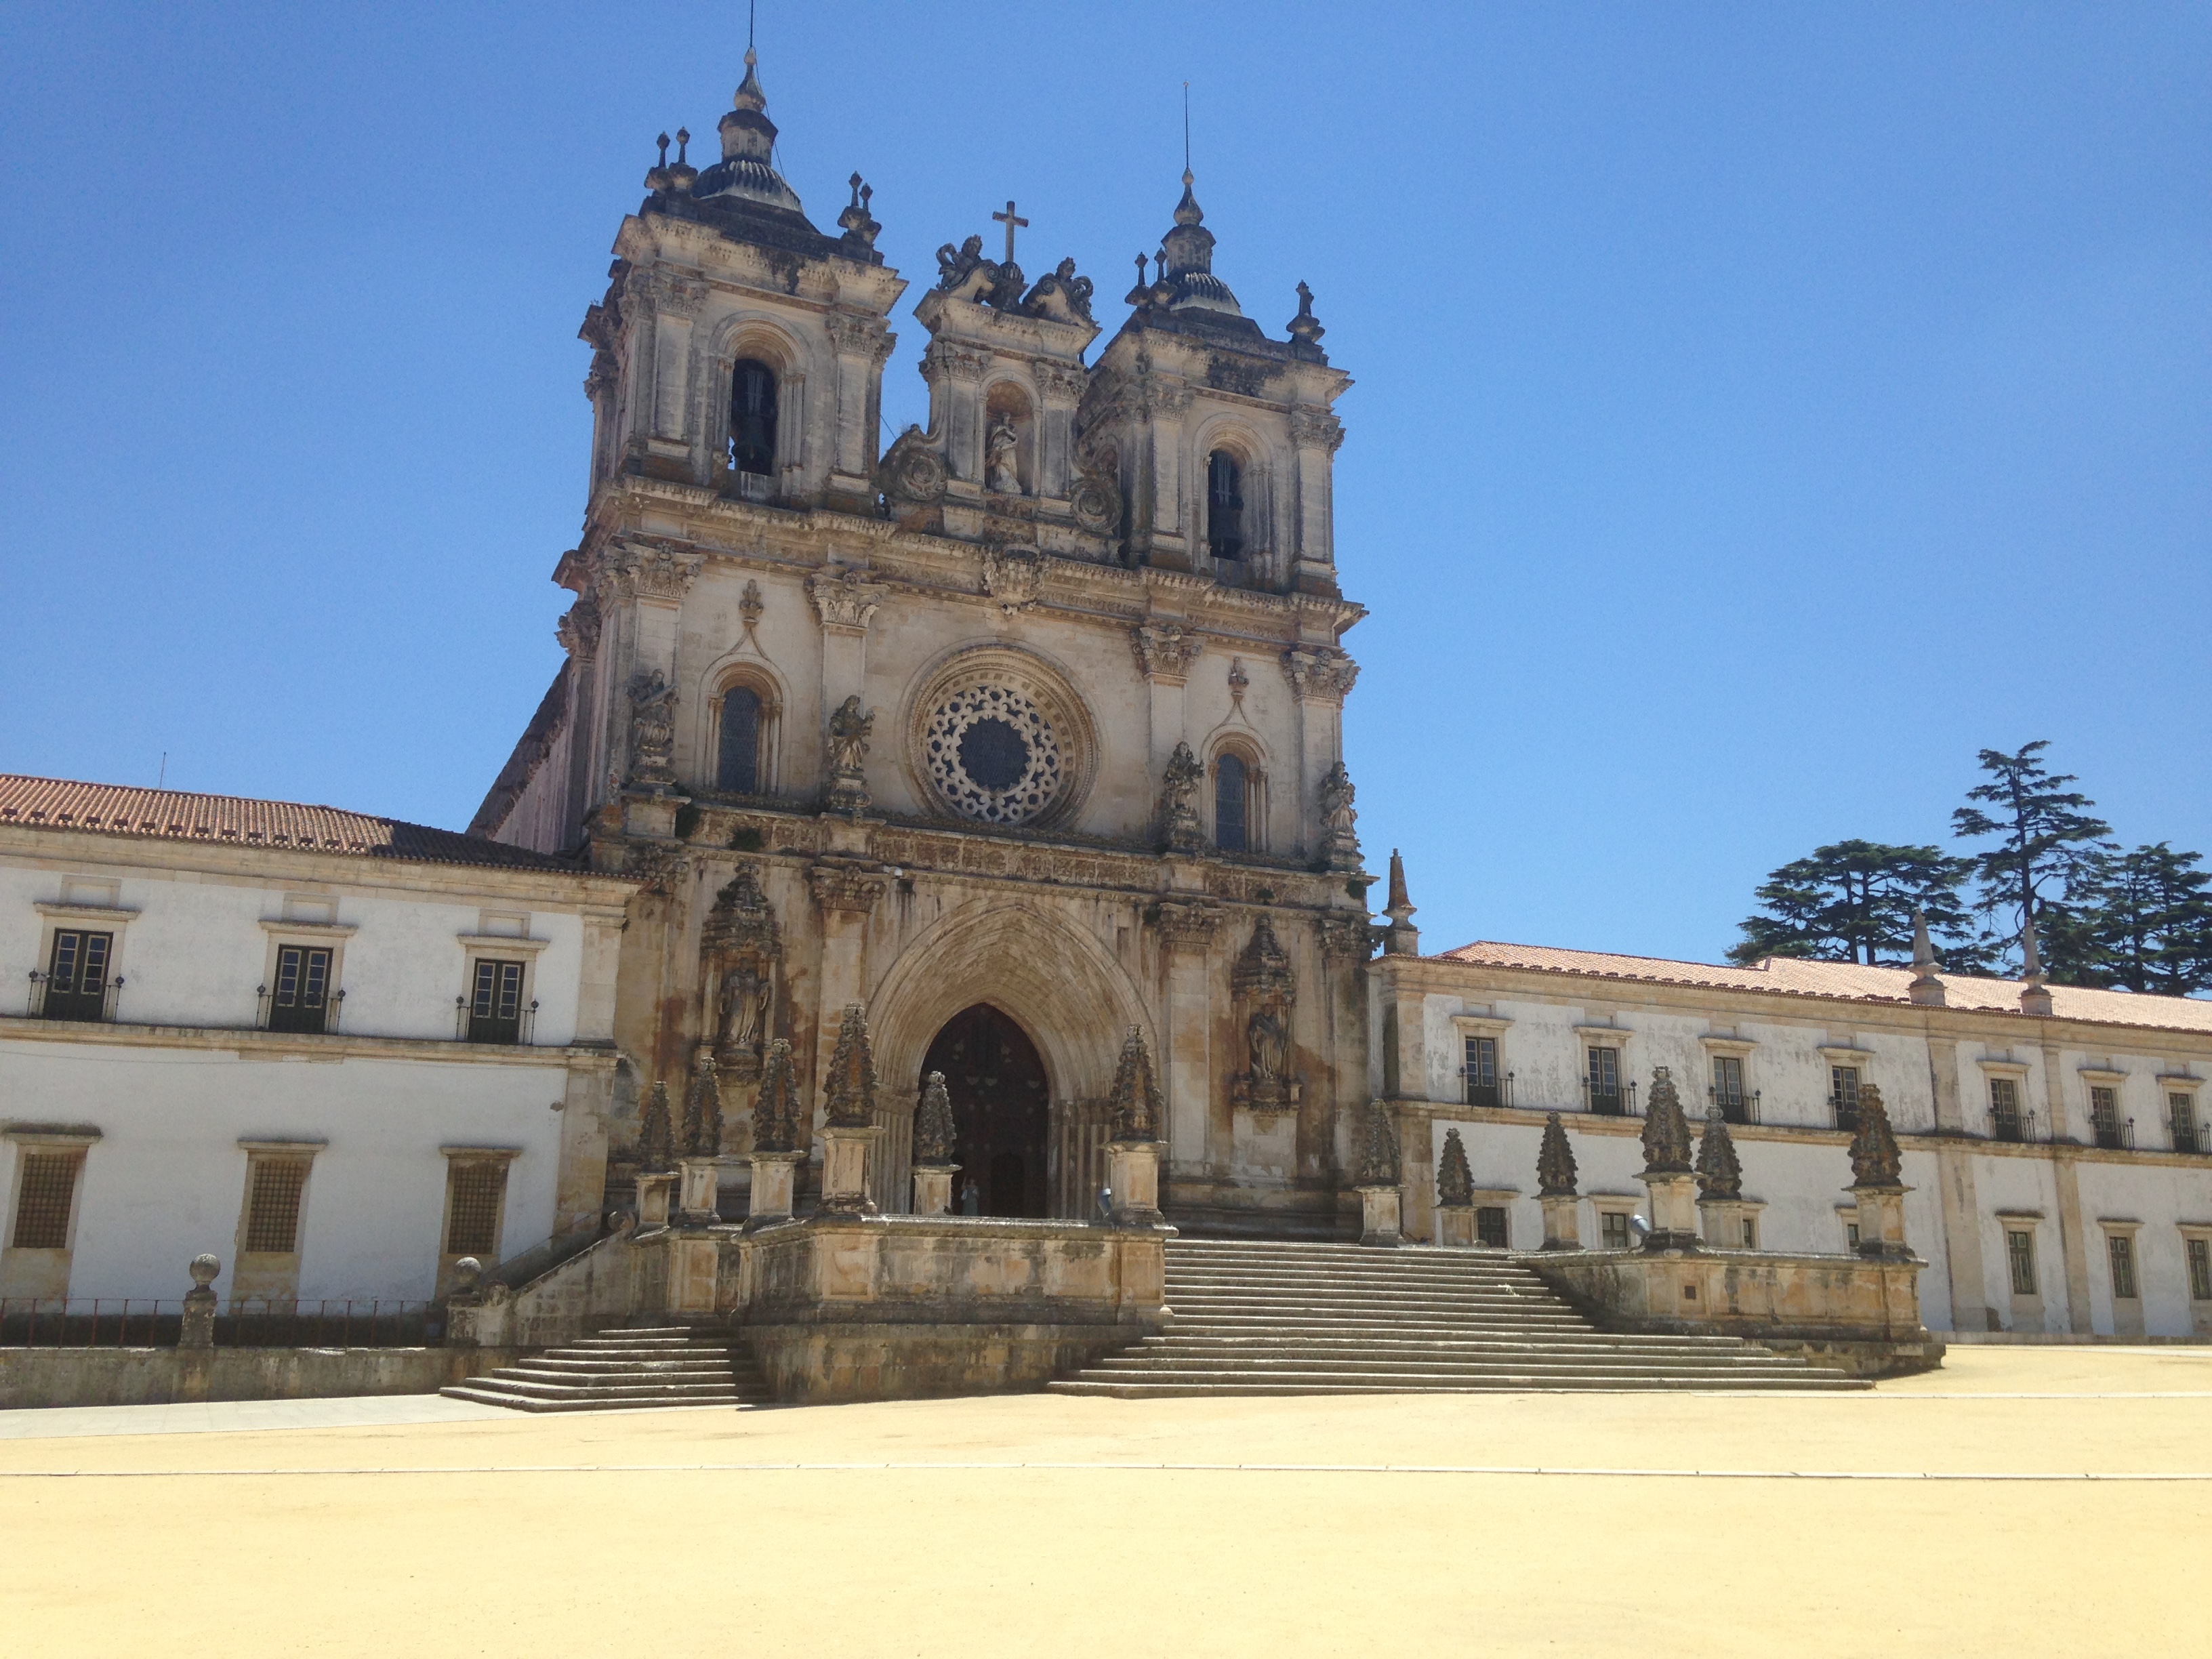 The monastery of Alcabaca